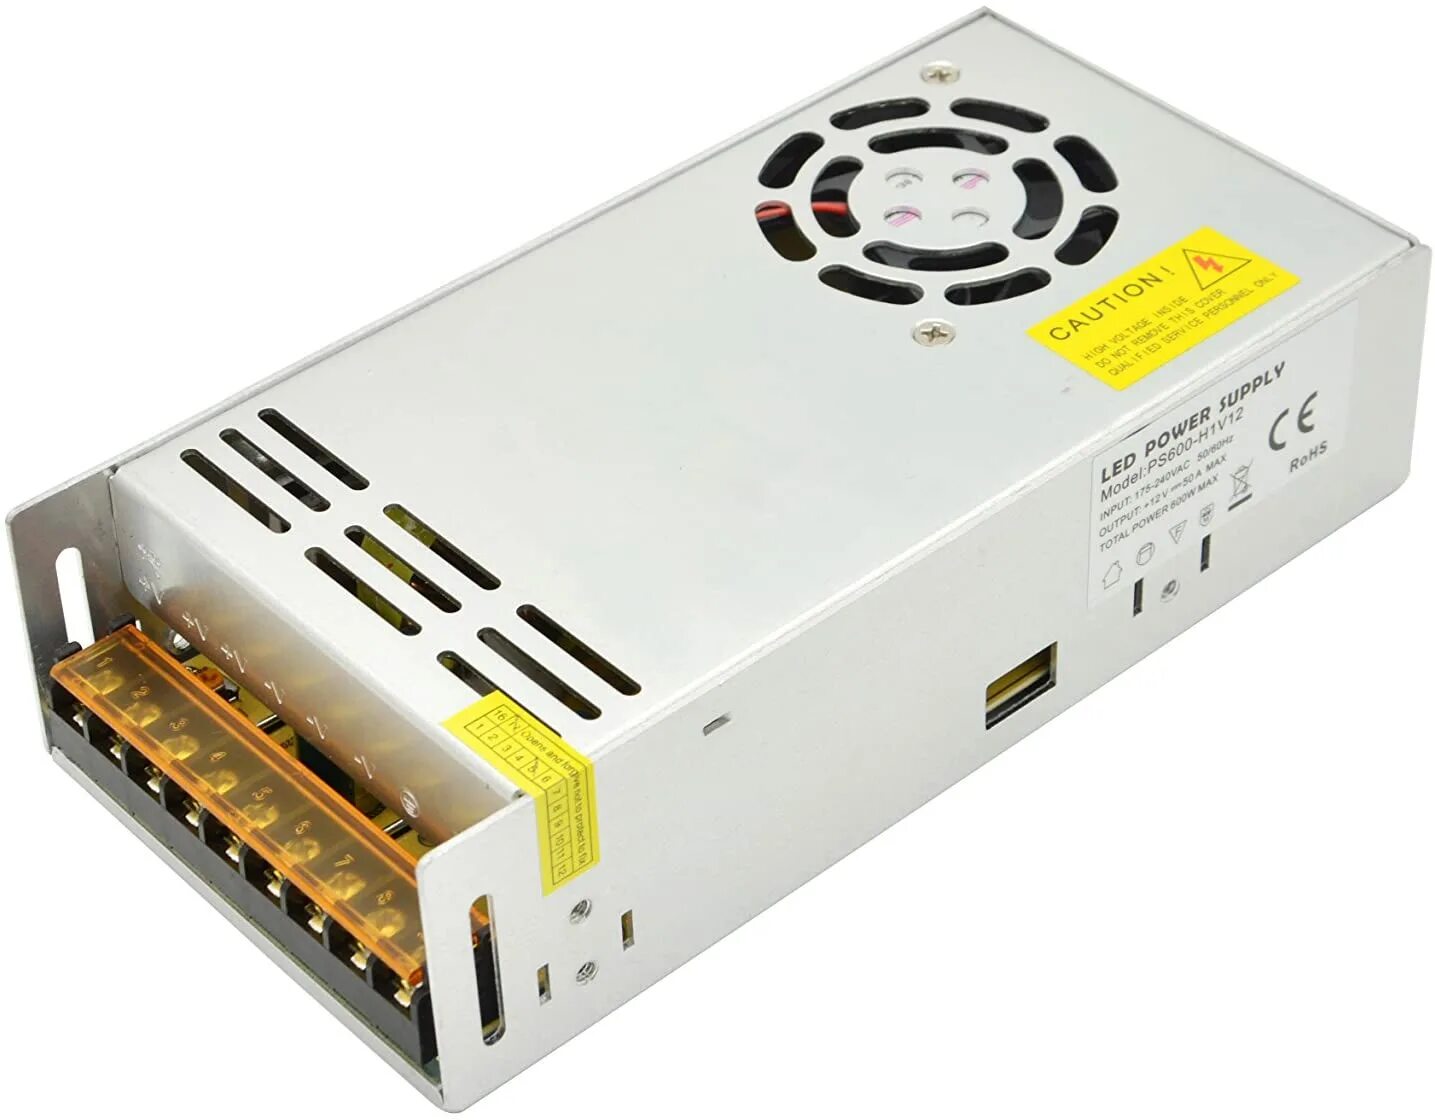 Led power supply 12v. Блок питания ps600-h1v12 600w 12v LEDS Power. Блок питания для светодиодной ленты 12v 600w. Блок питания 12v 8a светодиодной\.